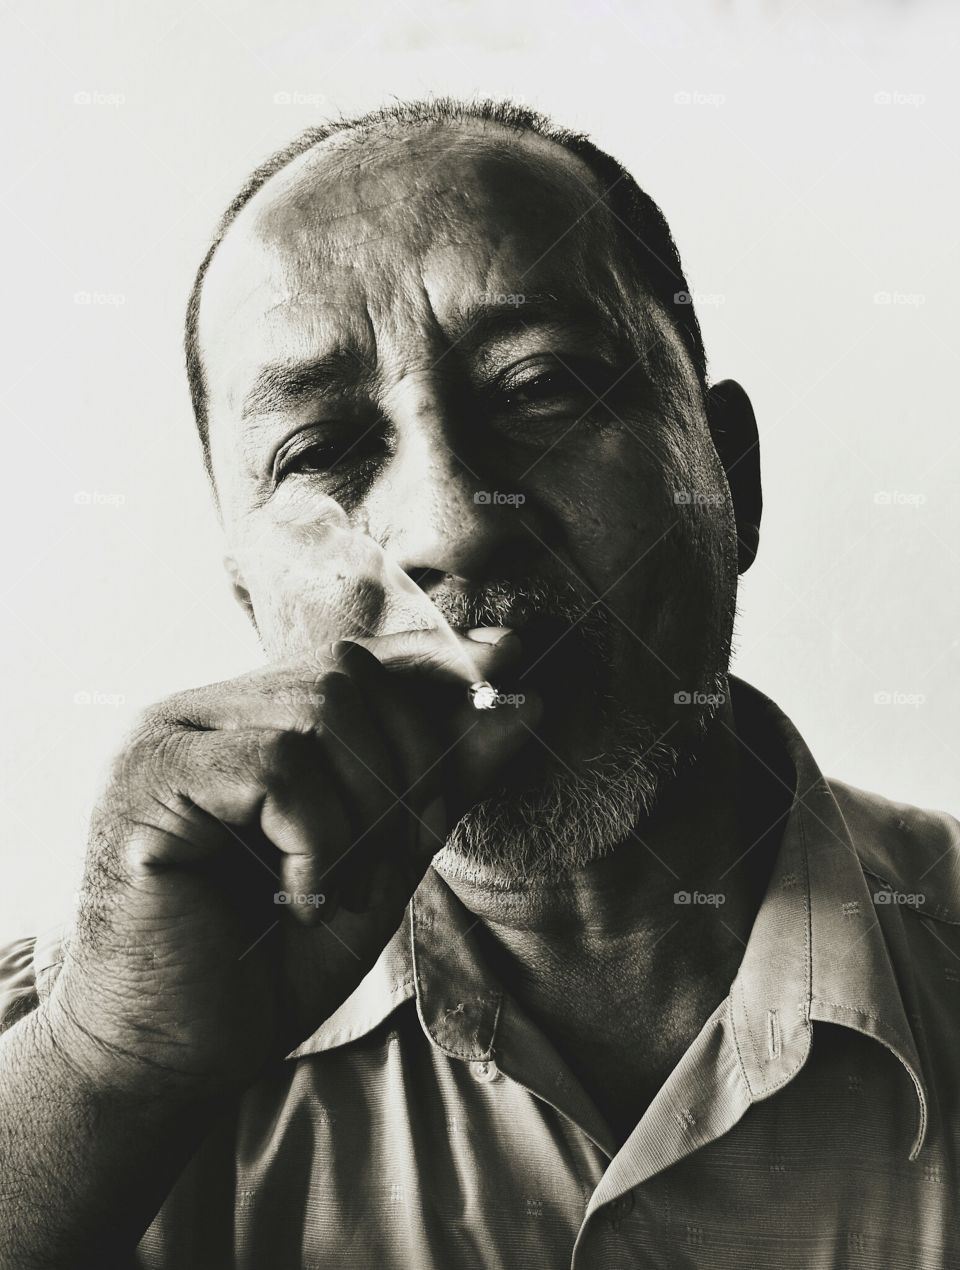 Black and white image of a smoking man